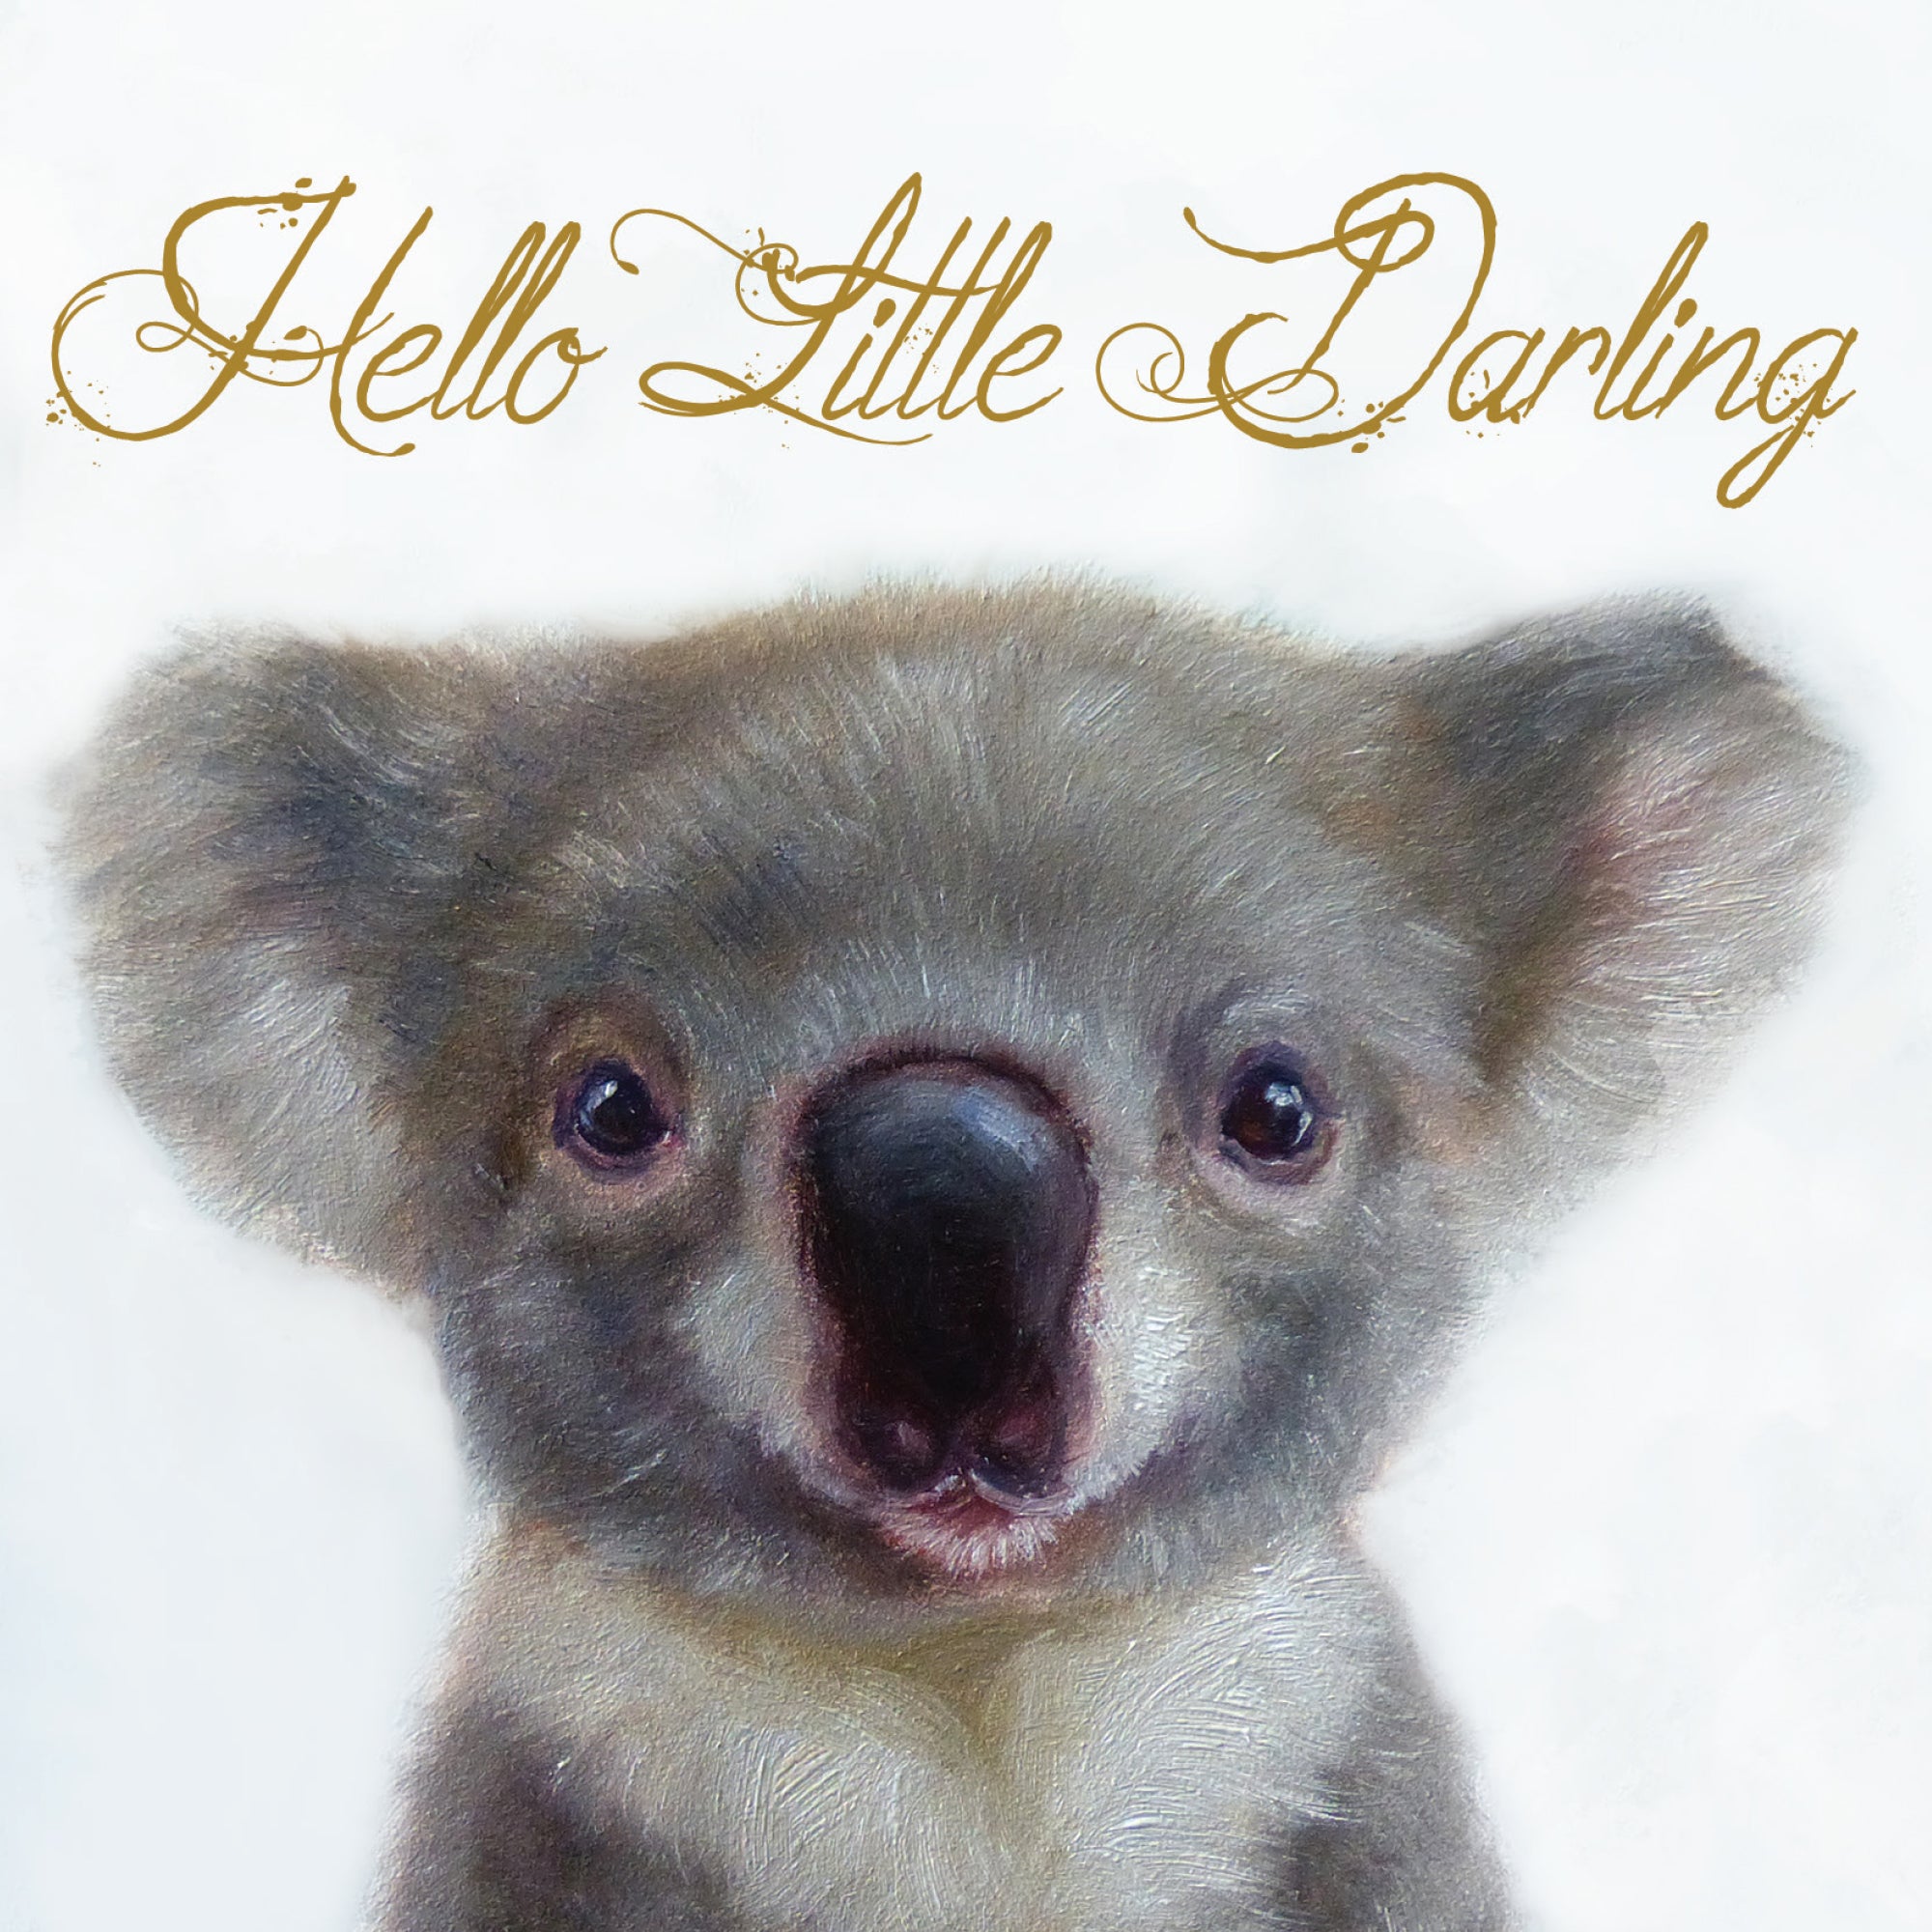 Greeting Card Little Darling Koala